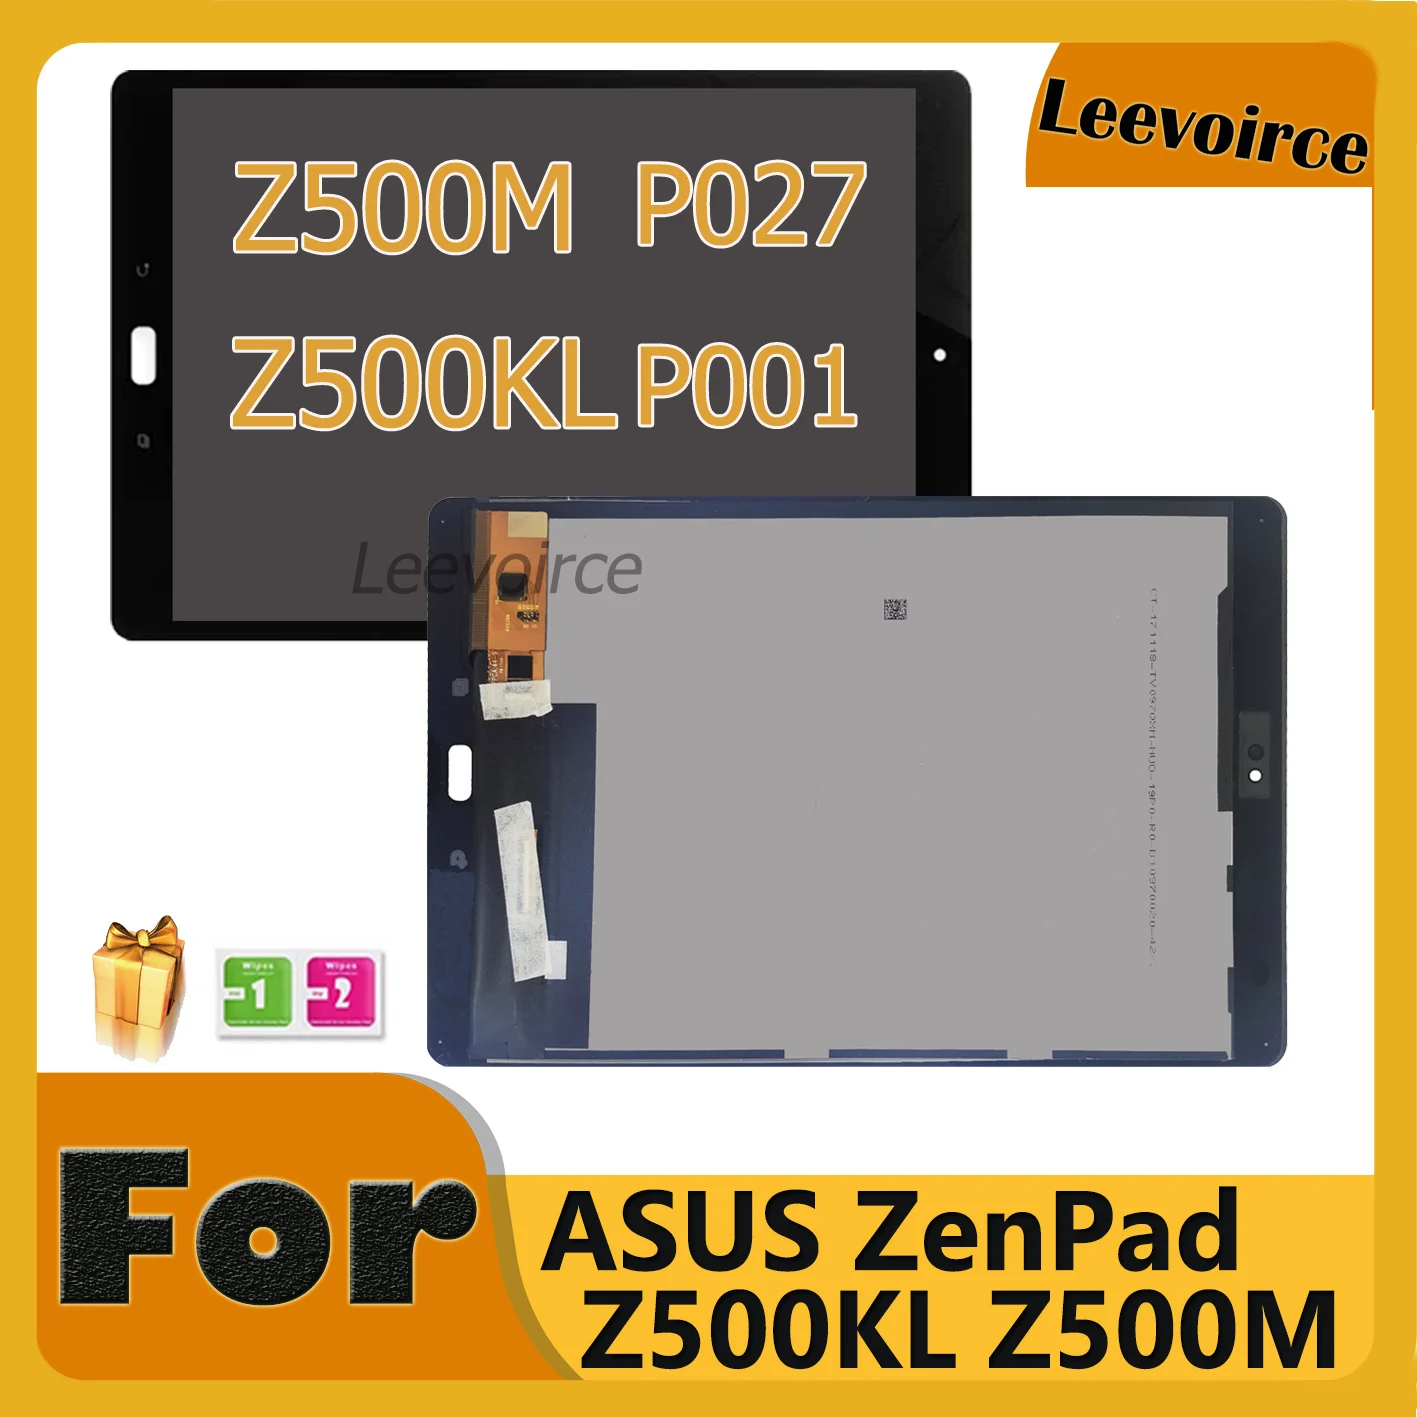 ЖК-дисплей 9 7 дюйма для Asus ZenPad 3S Z10 Z500M P027 Z500KL P001 ZT500KL Z500 - купить по выгодной цене |